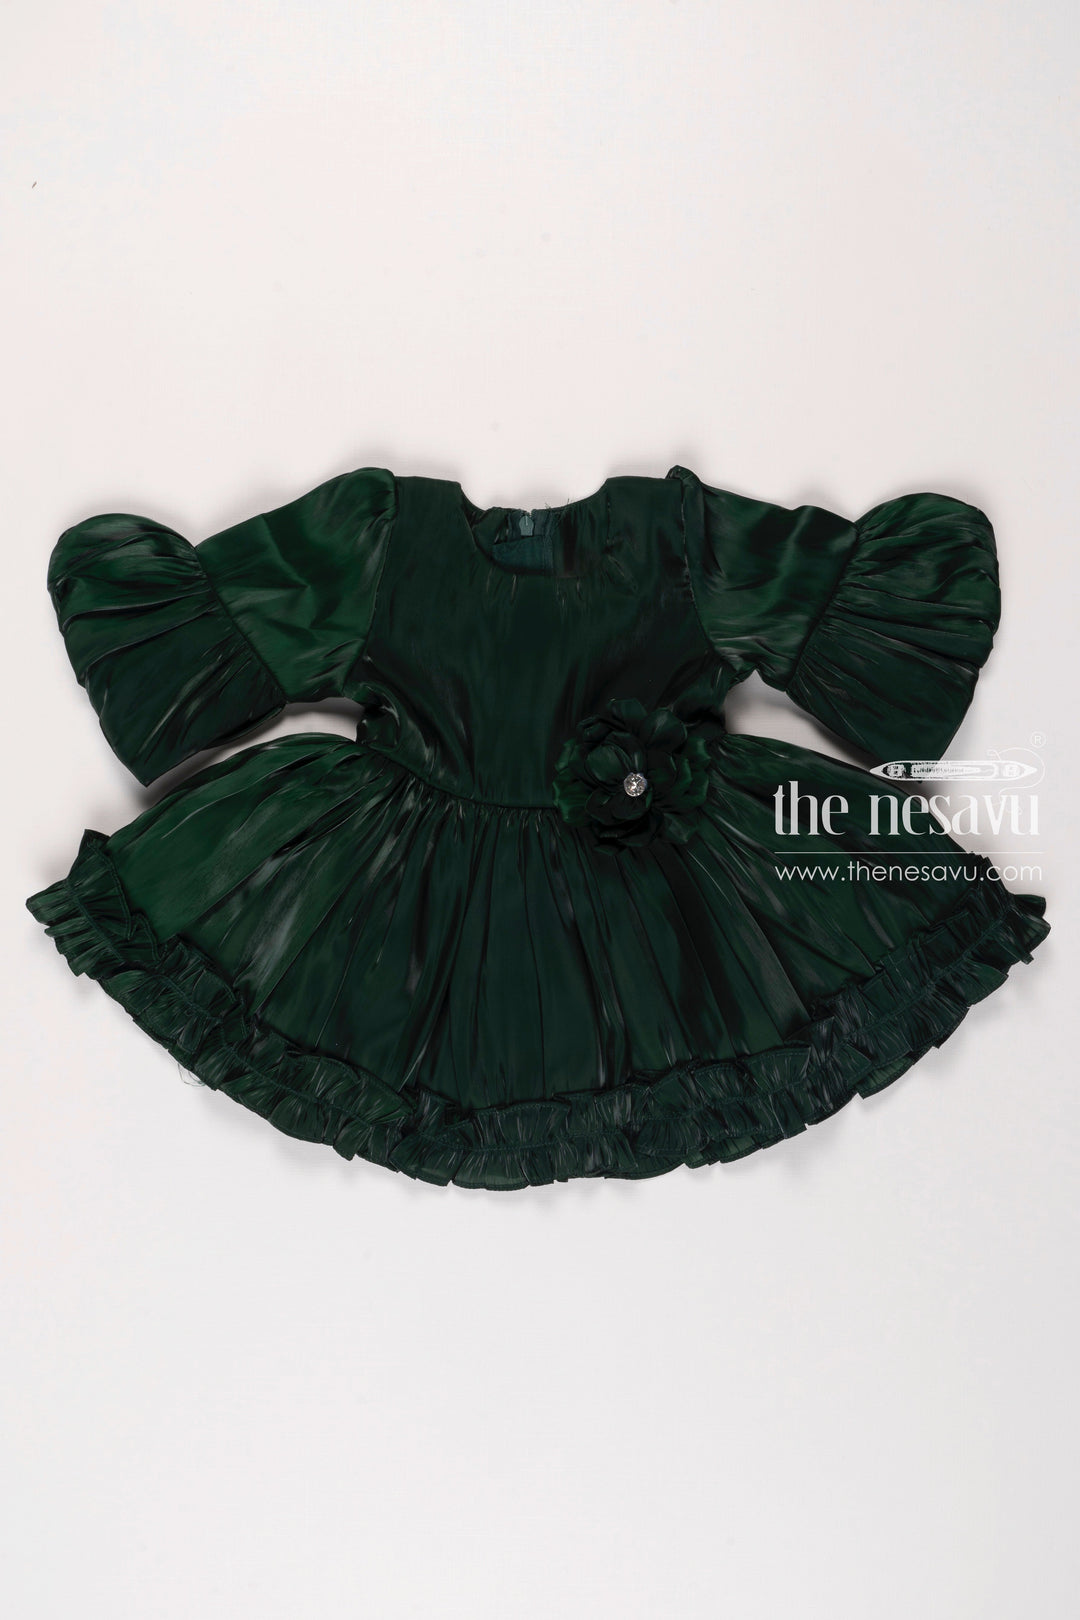 The Nesavu Baby Fancy Frock Luxe Emerald Infant Party Dress  Designer Newborn Frock with Ruffle Detail Nesavu 14 (6M) / Green / Organza BFJ476E-14 Newborn Designer Dresses | Infant Party Dresses | Exclusive Baby Clothes Online | The Nesavu